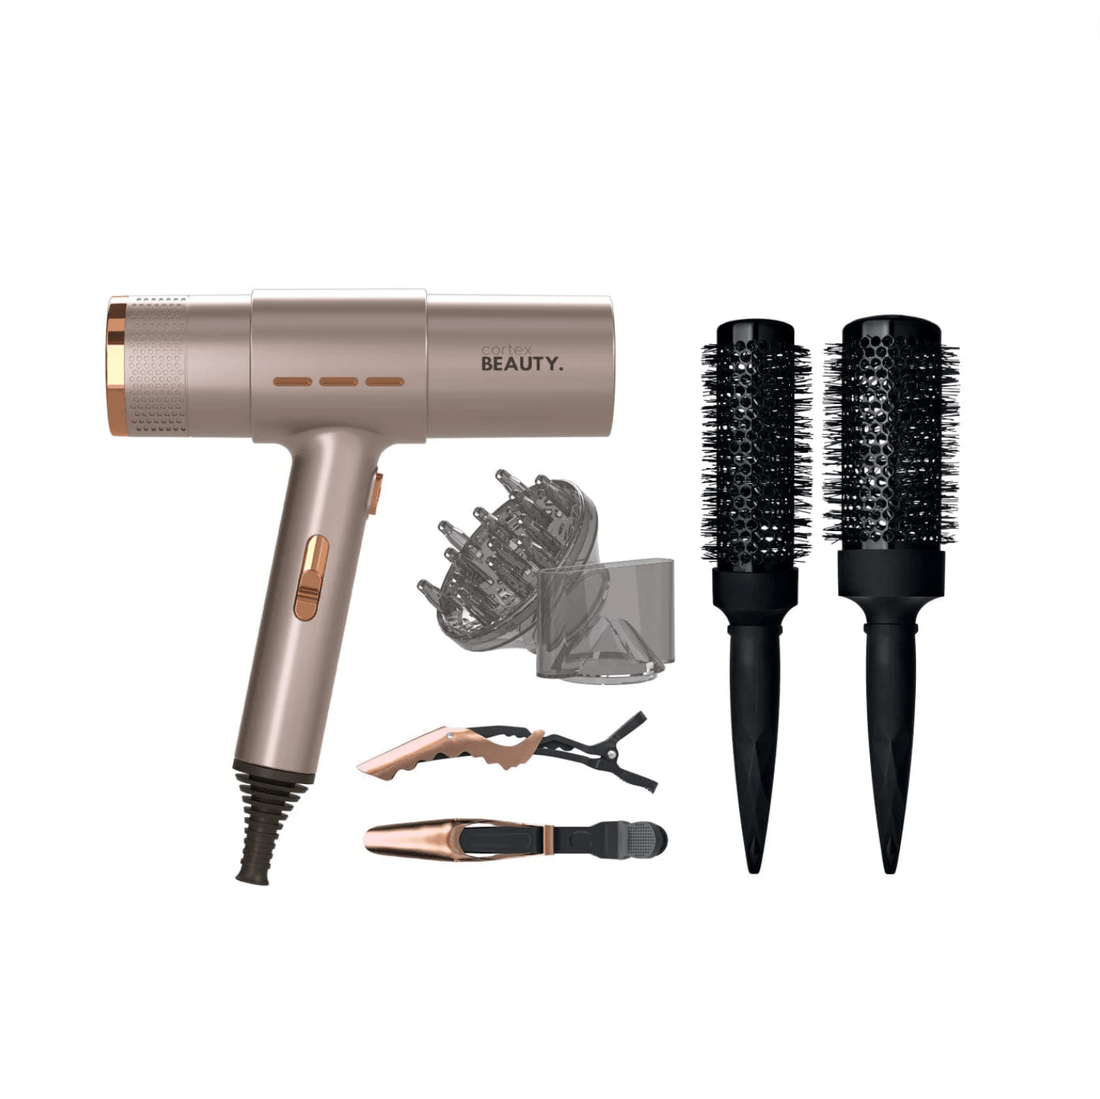 Cortex Beauty Turbo Blazer - Salon Performance Styling Hairy Dryer Set